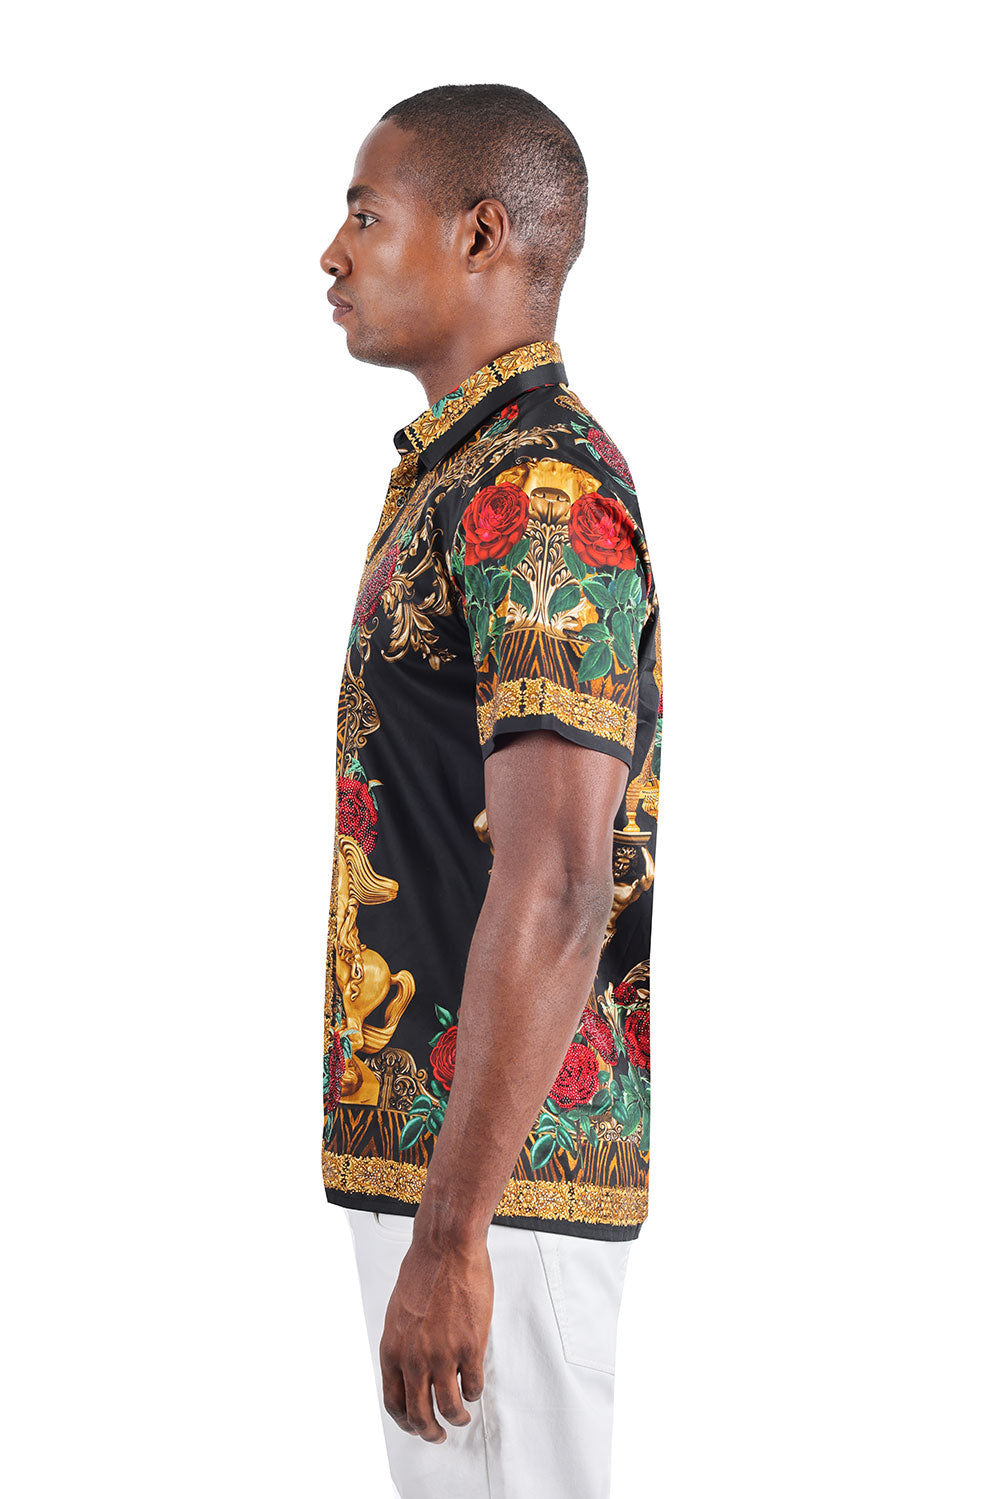 BARABAS Men's Leopard and Rhinestone Floral Short Sleeve Shirts 3SR418 Black